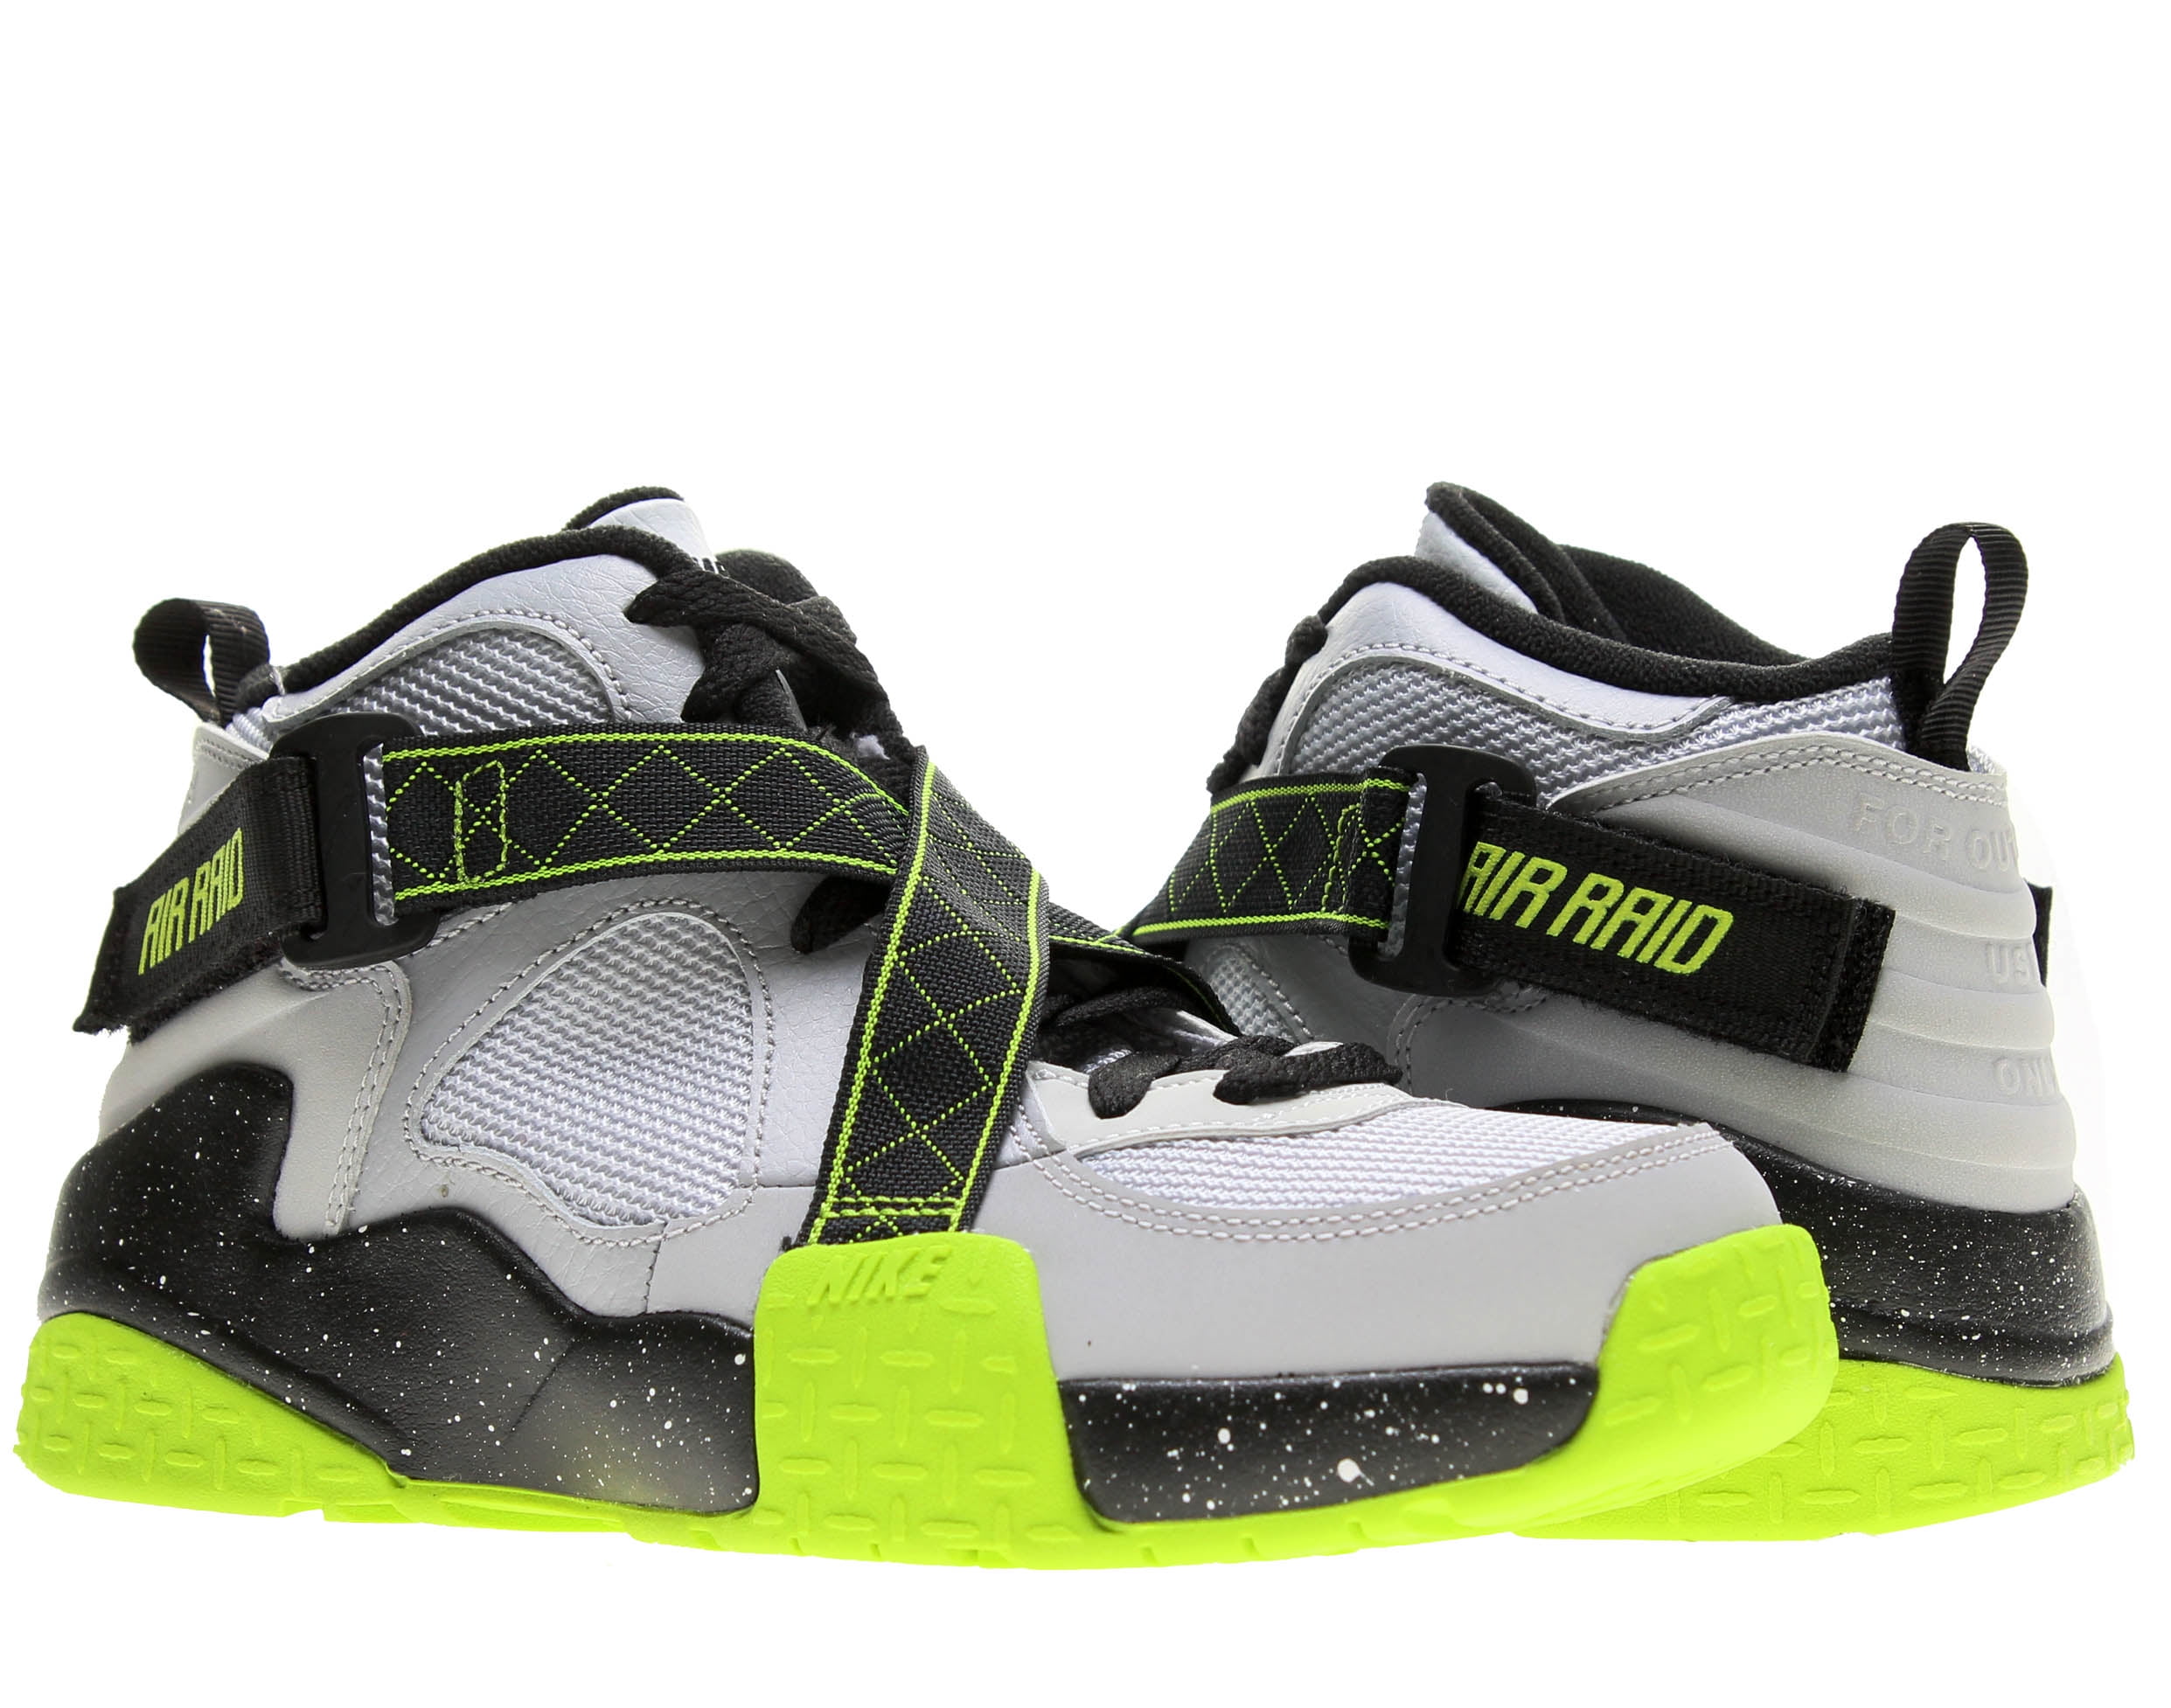 Nike Air Raid White Black Basketball Shoes